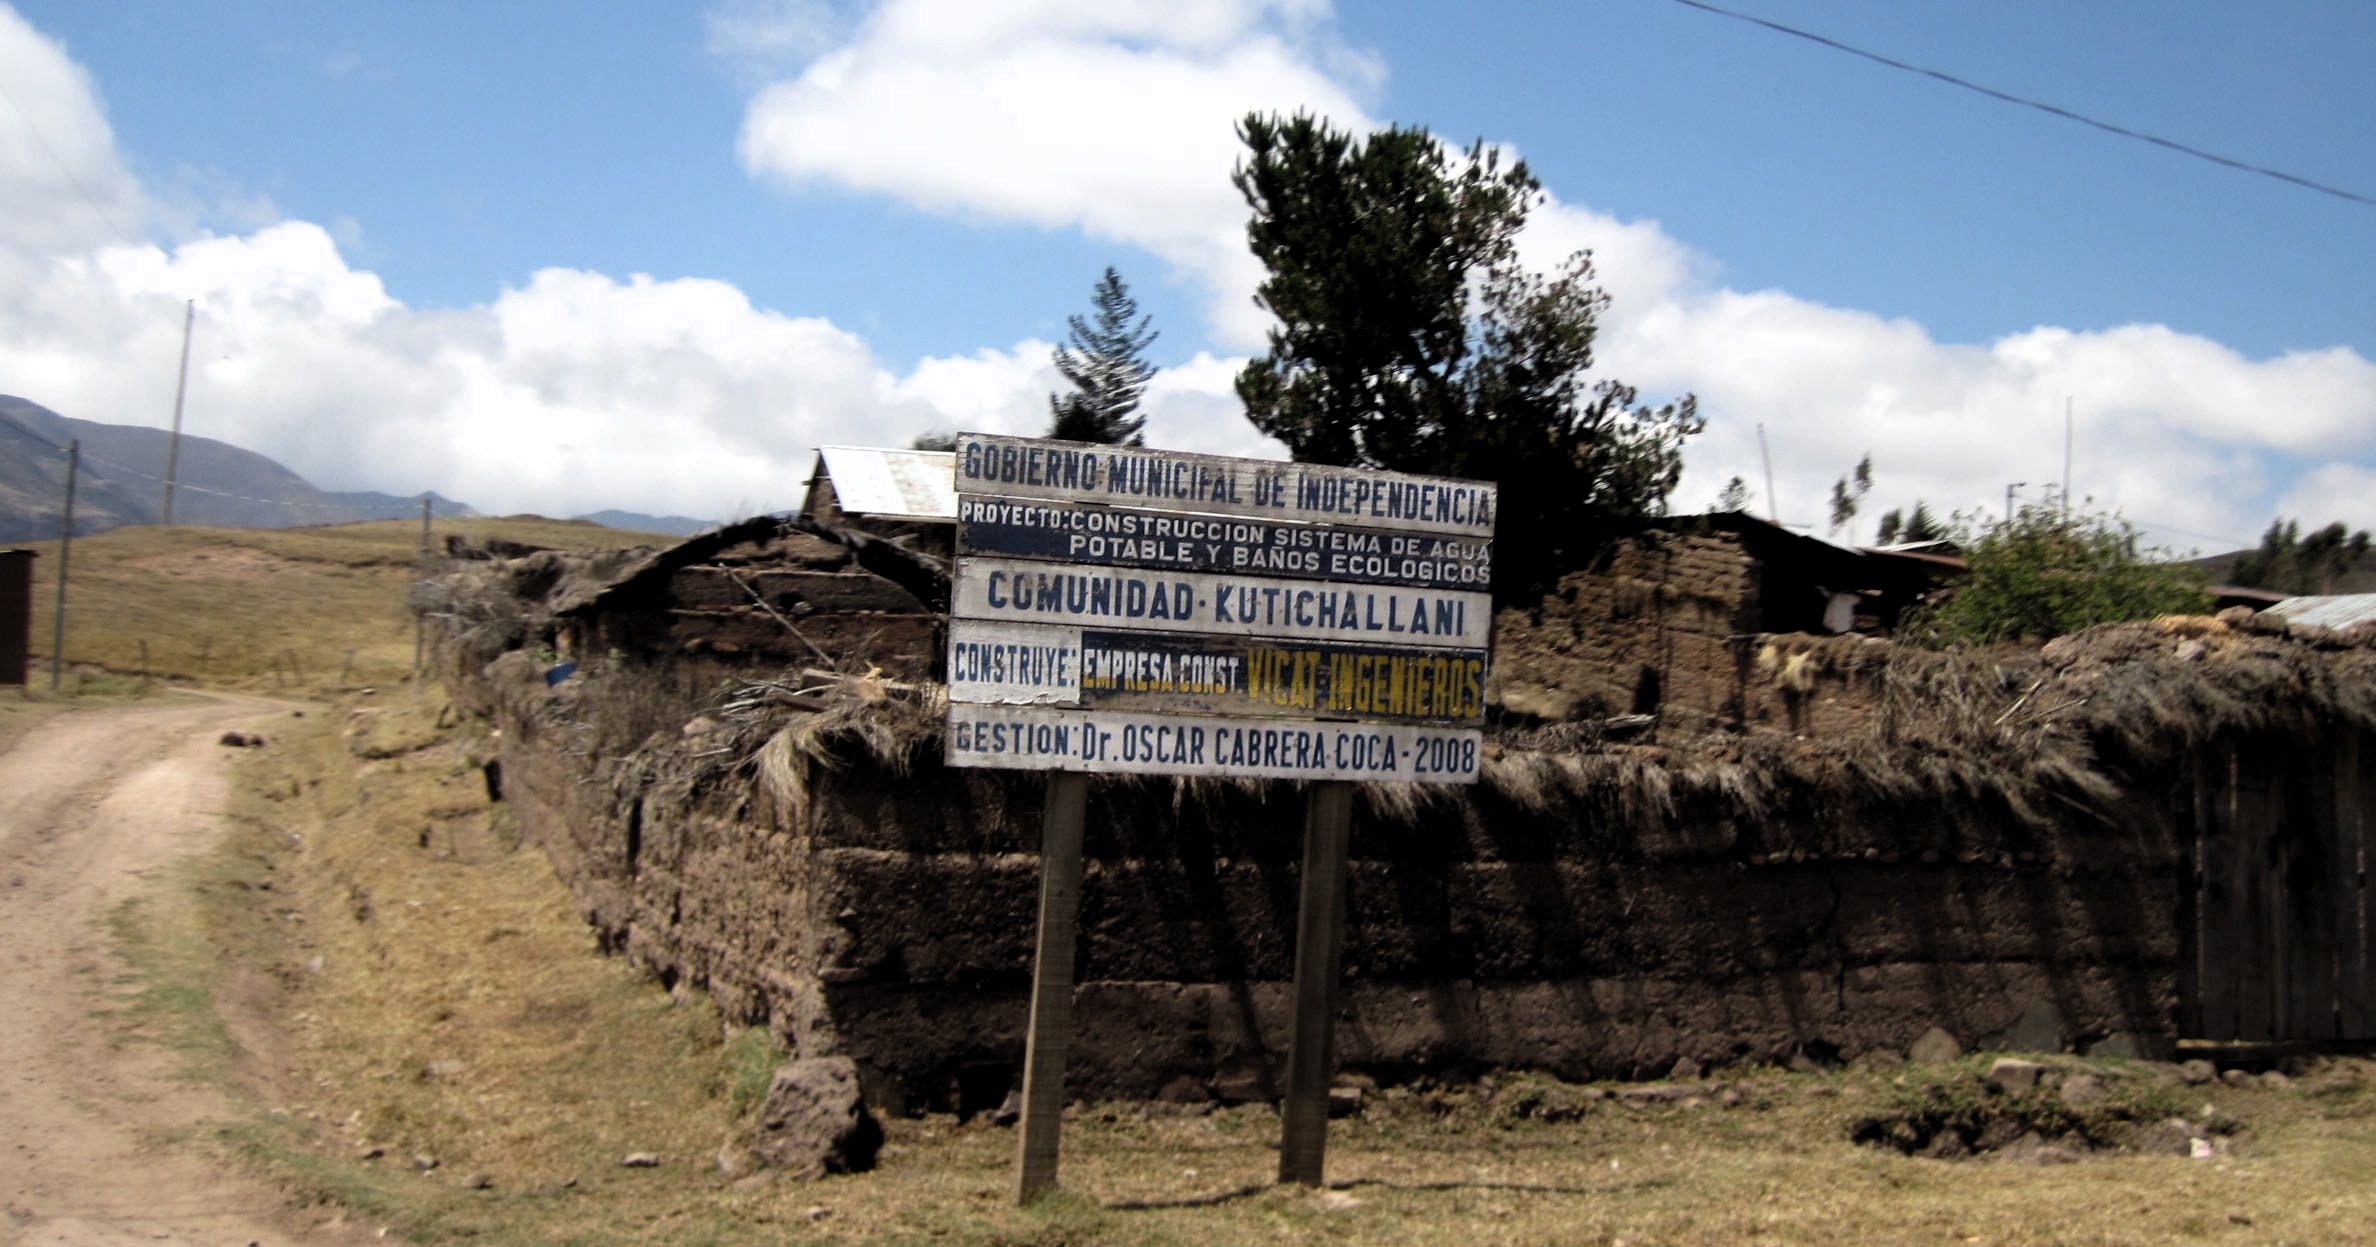 Travesía Coroico - Cochabamba, ruta Cahuata - Morocha, comunidad de Kutichallani de Independencia.